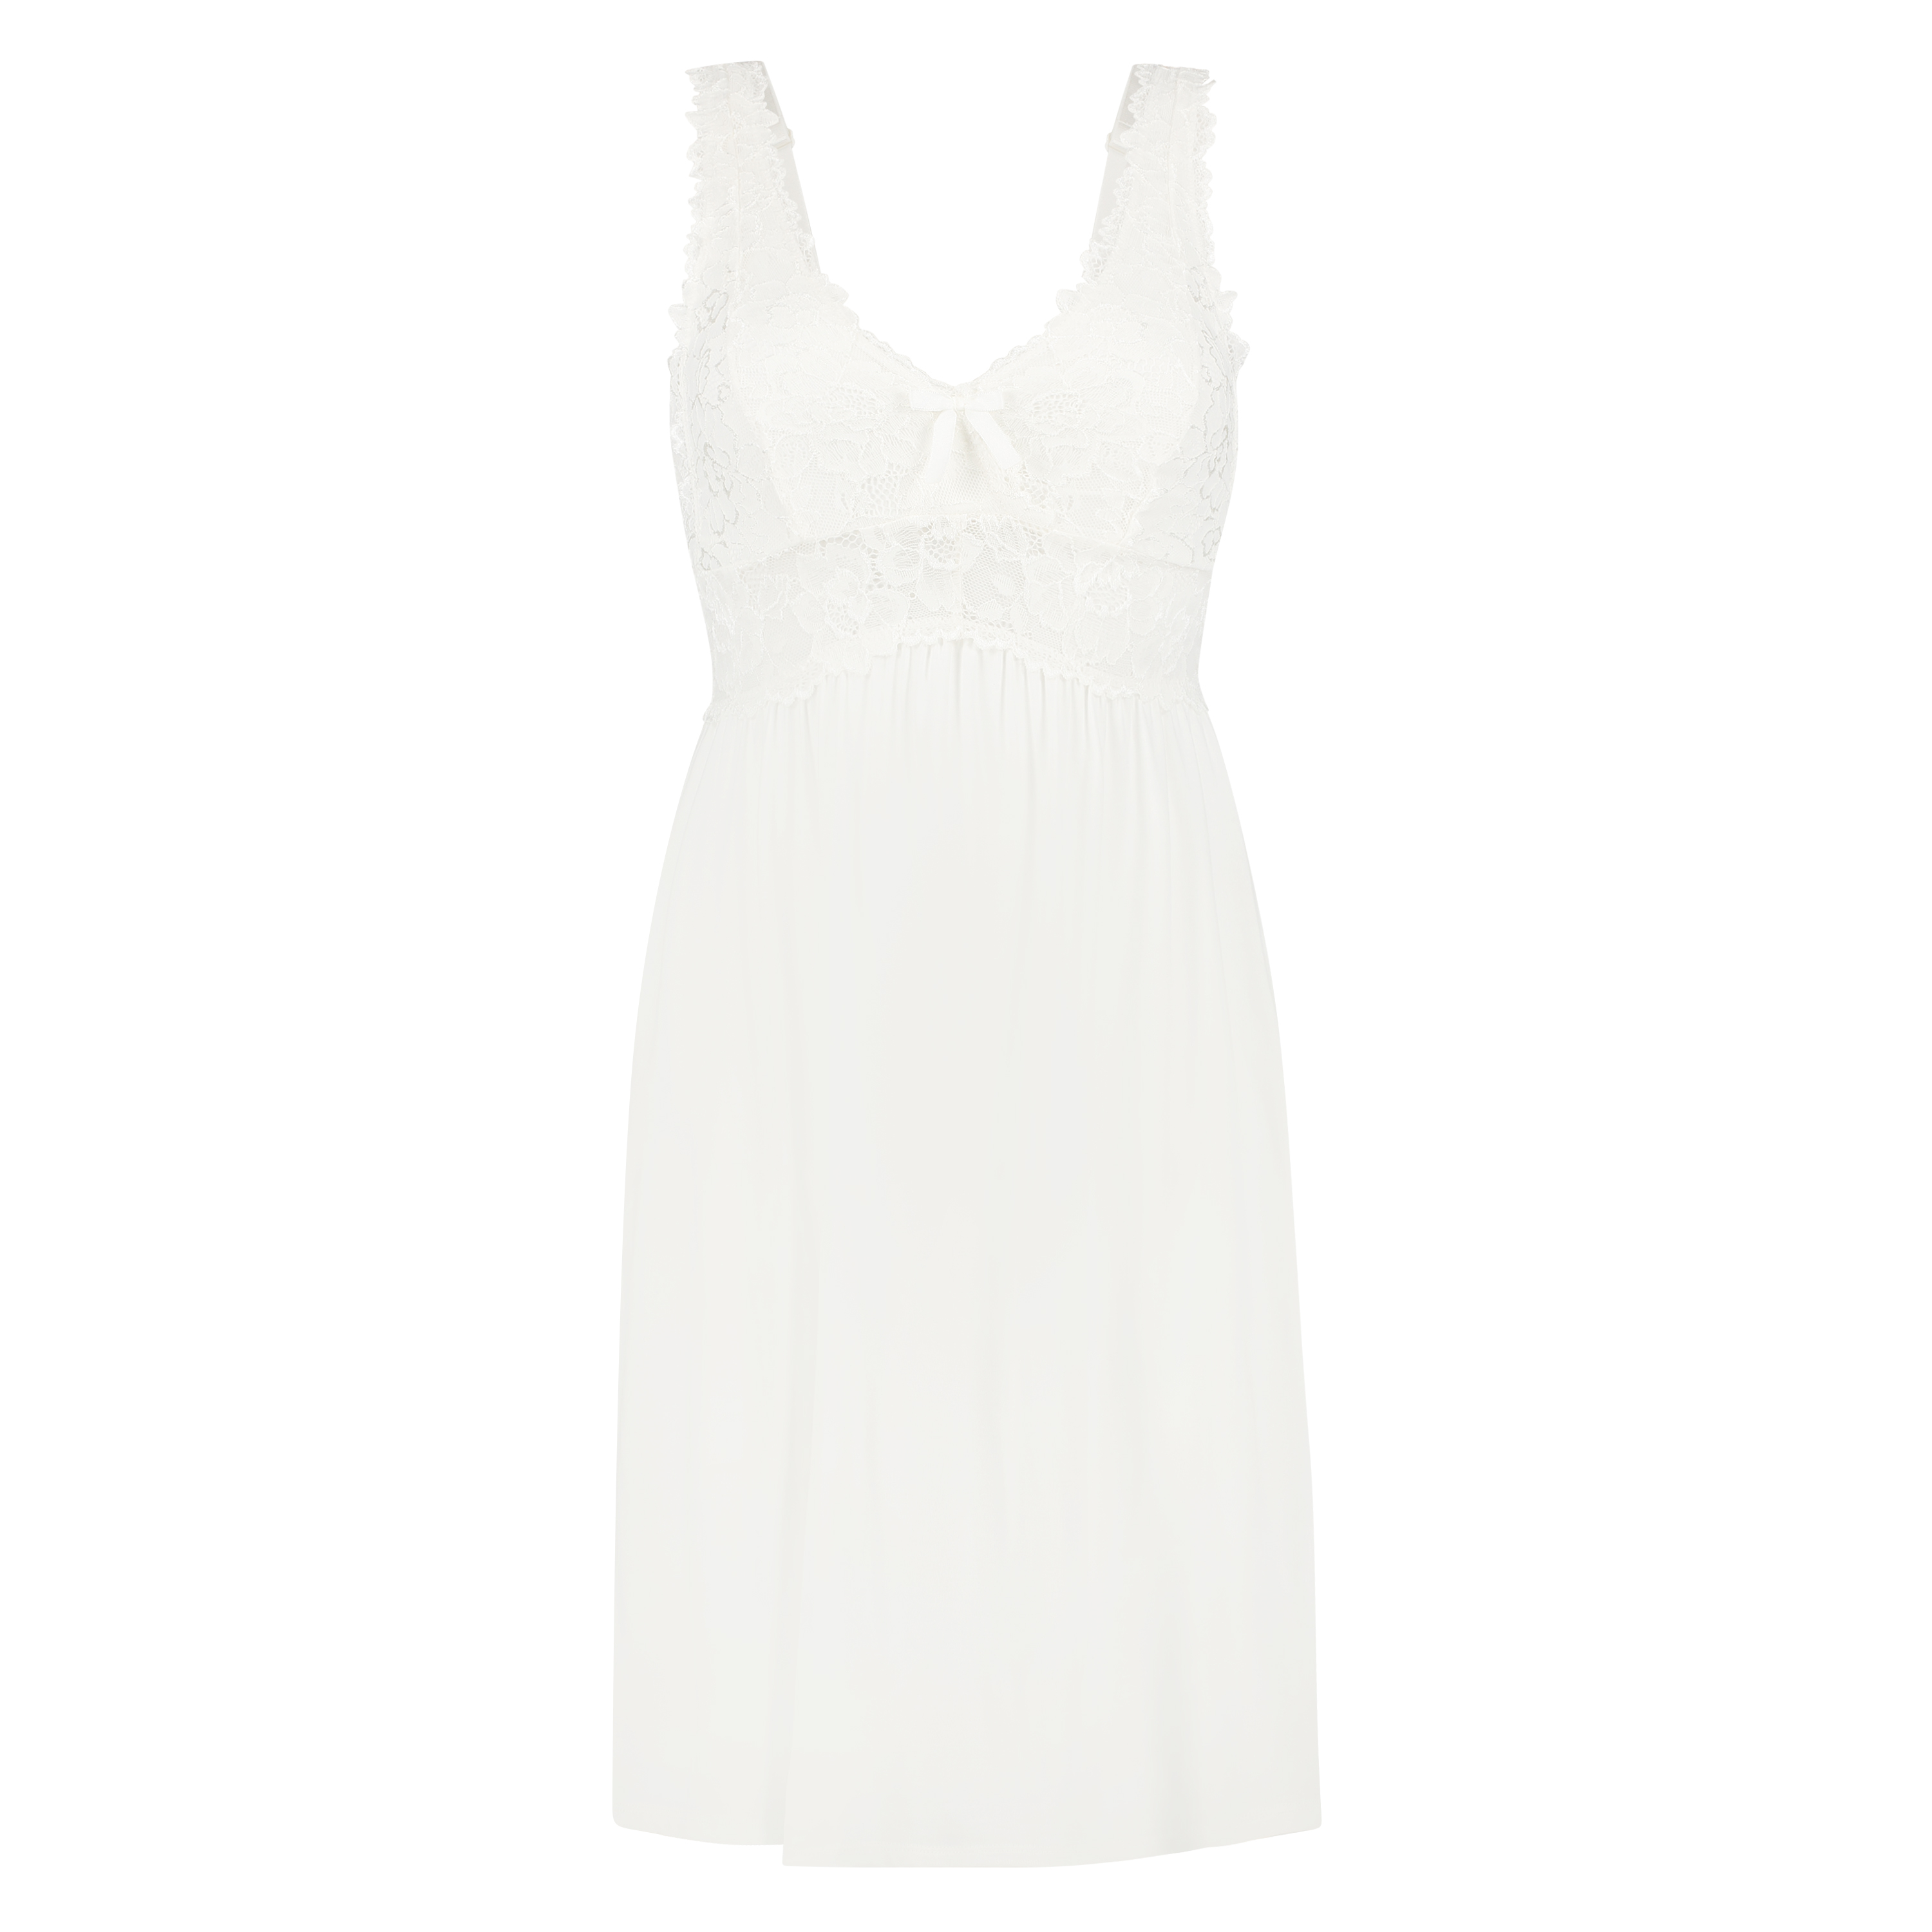 Nora Lace Slip Dress, White, main